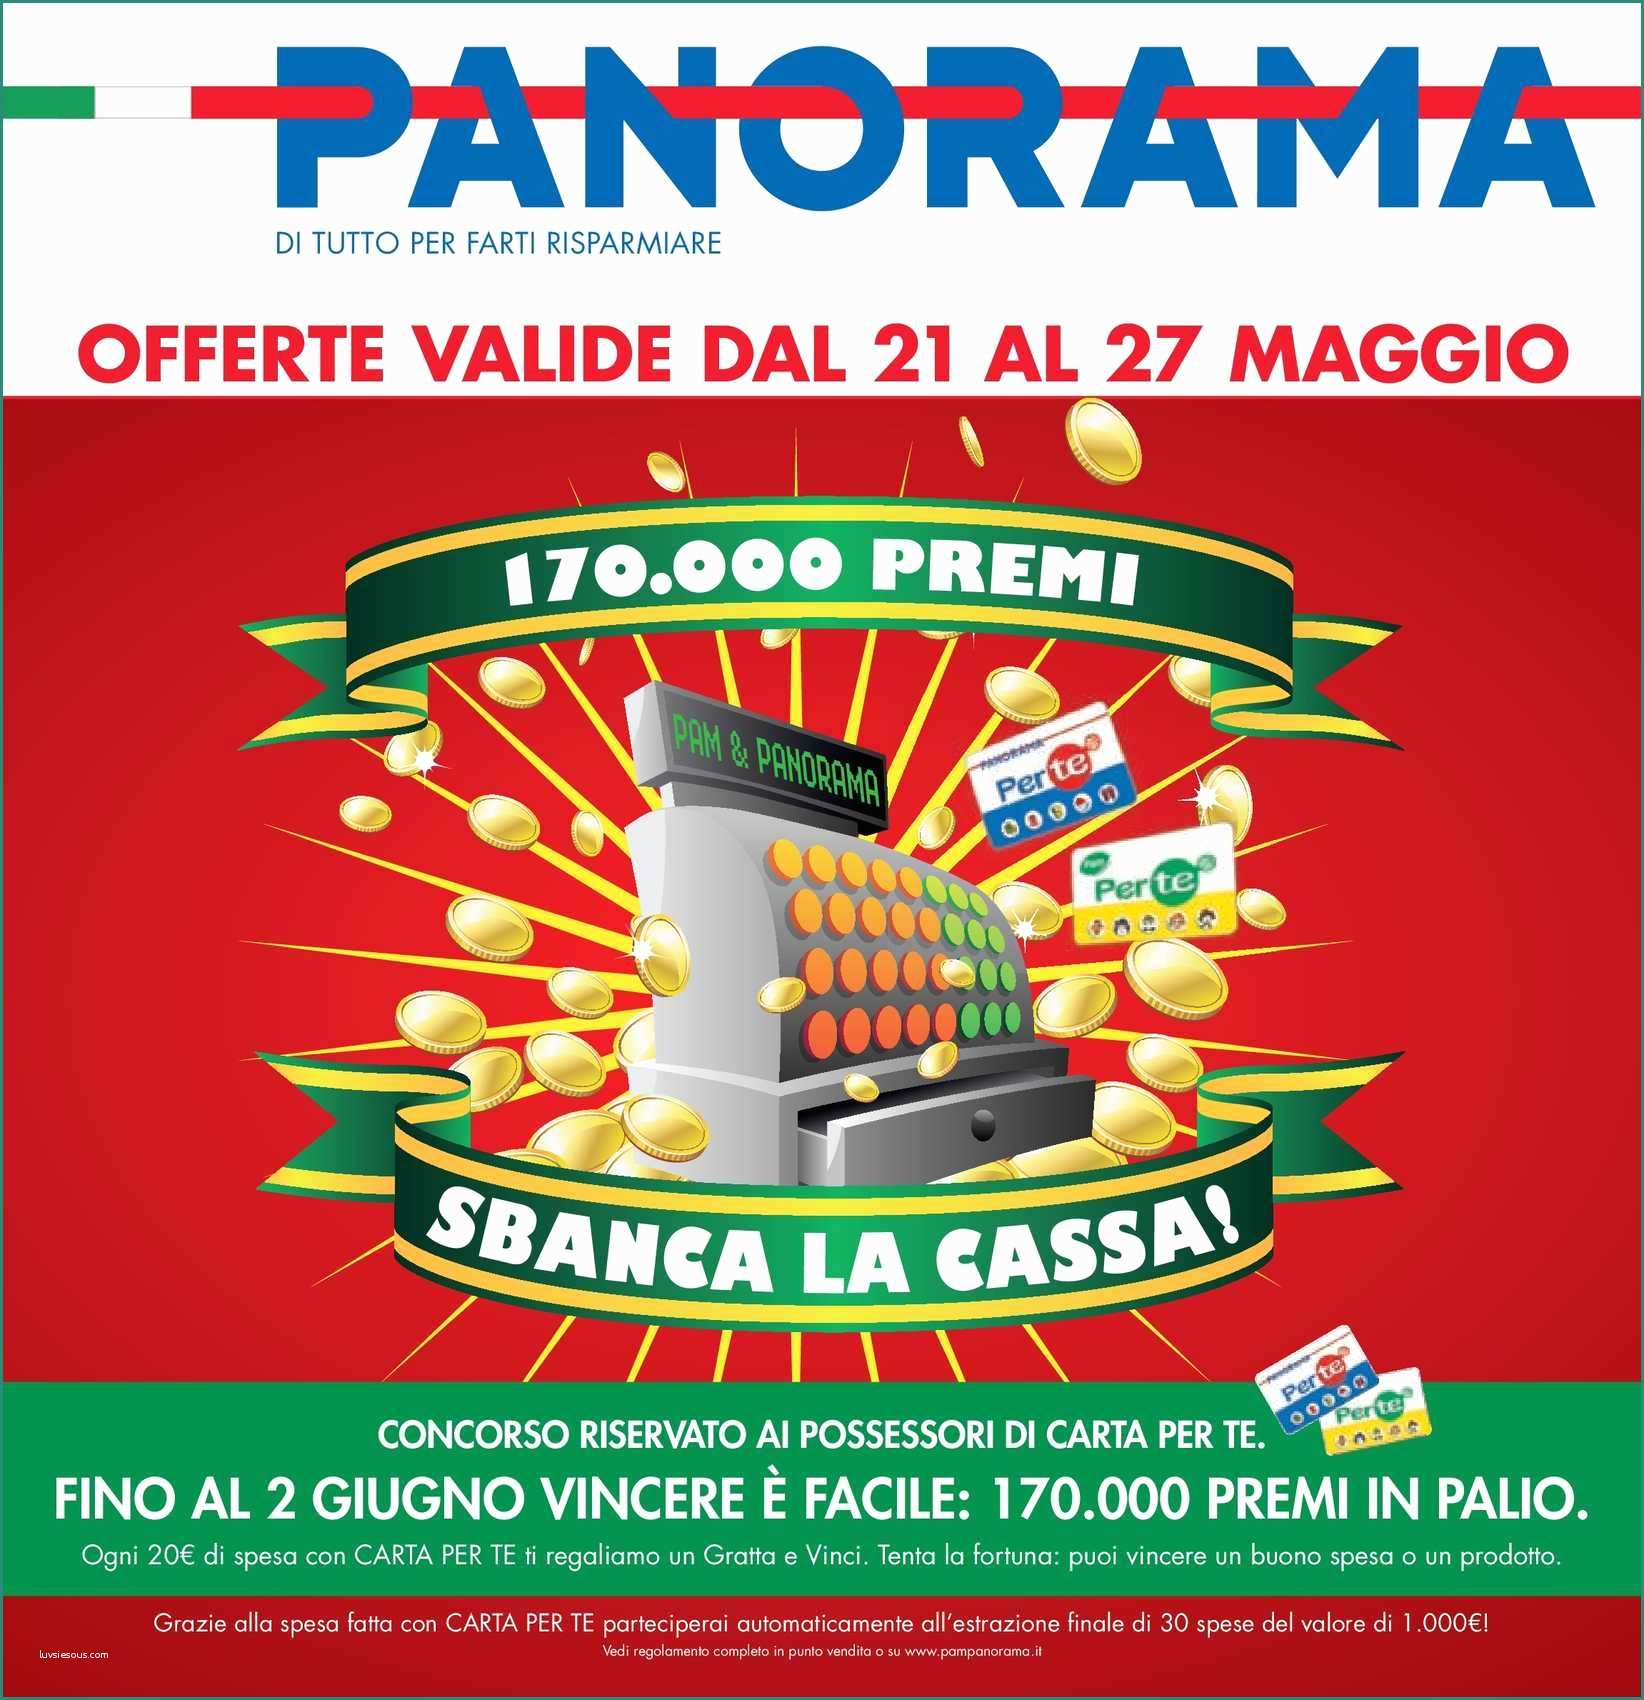 Comfee Fresko E Calaméo Volantino Panorama Dal 21 05 2015 Al 27 05 2015